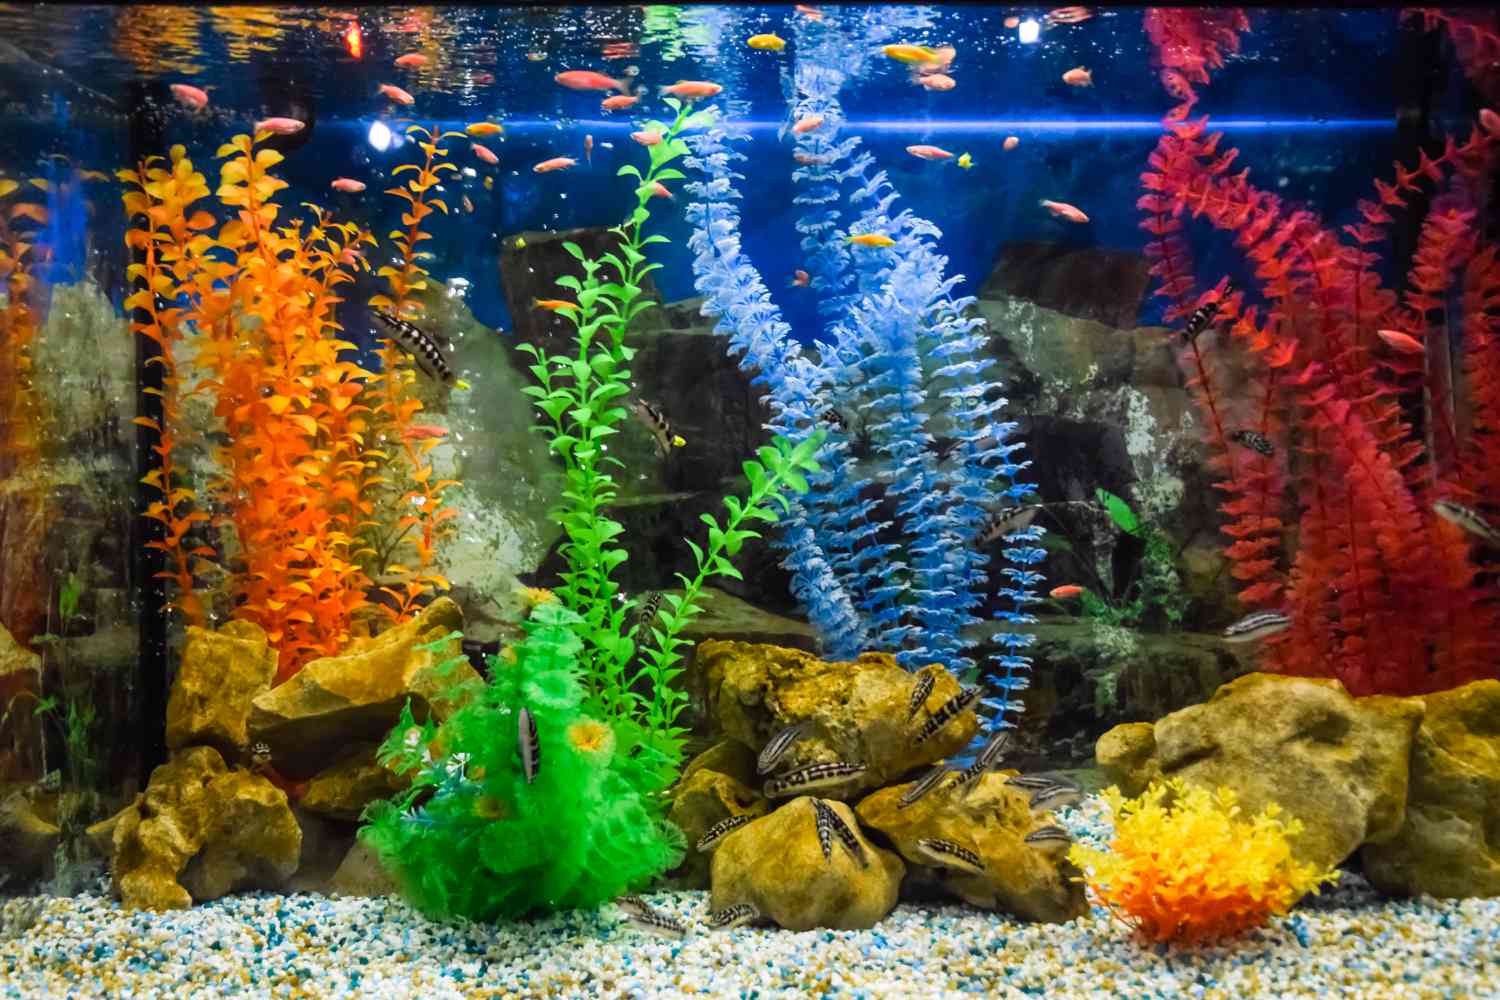 Wall mounted aquarium with tropical fish